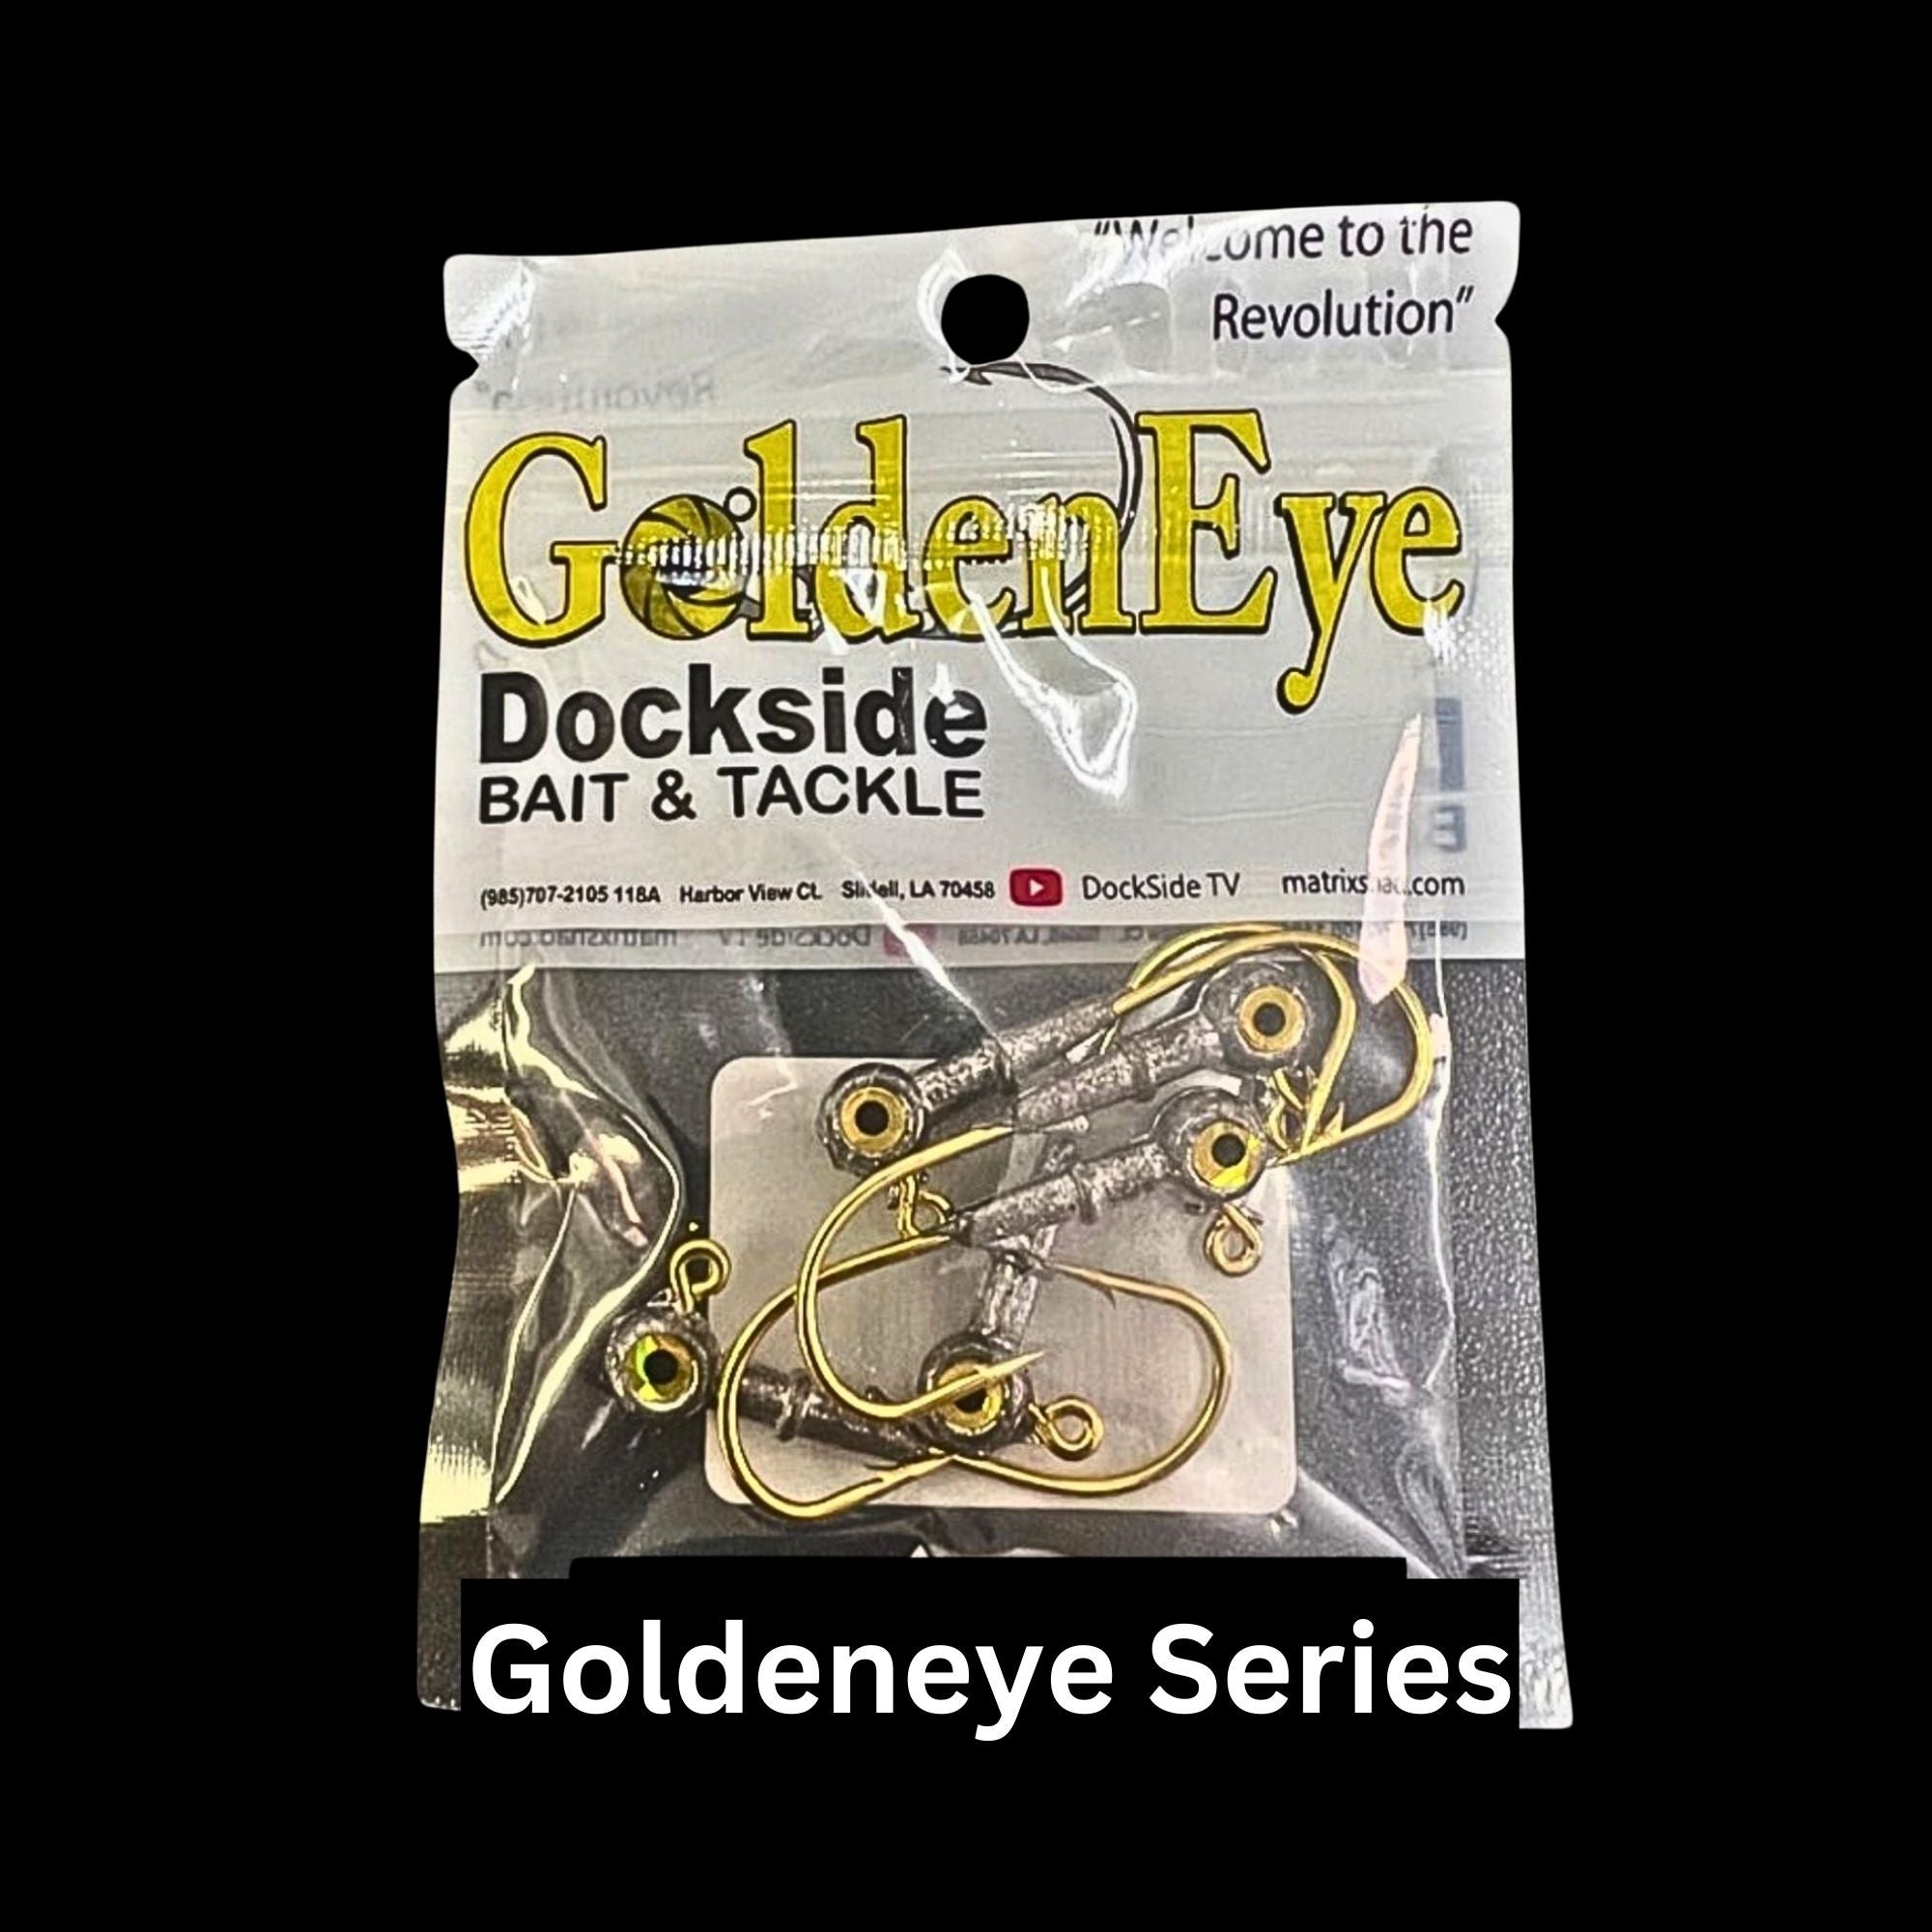 Gold Series” Goldeneye Jig Heads - Gold Eye & Hook, Matrix Shad